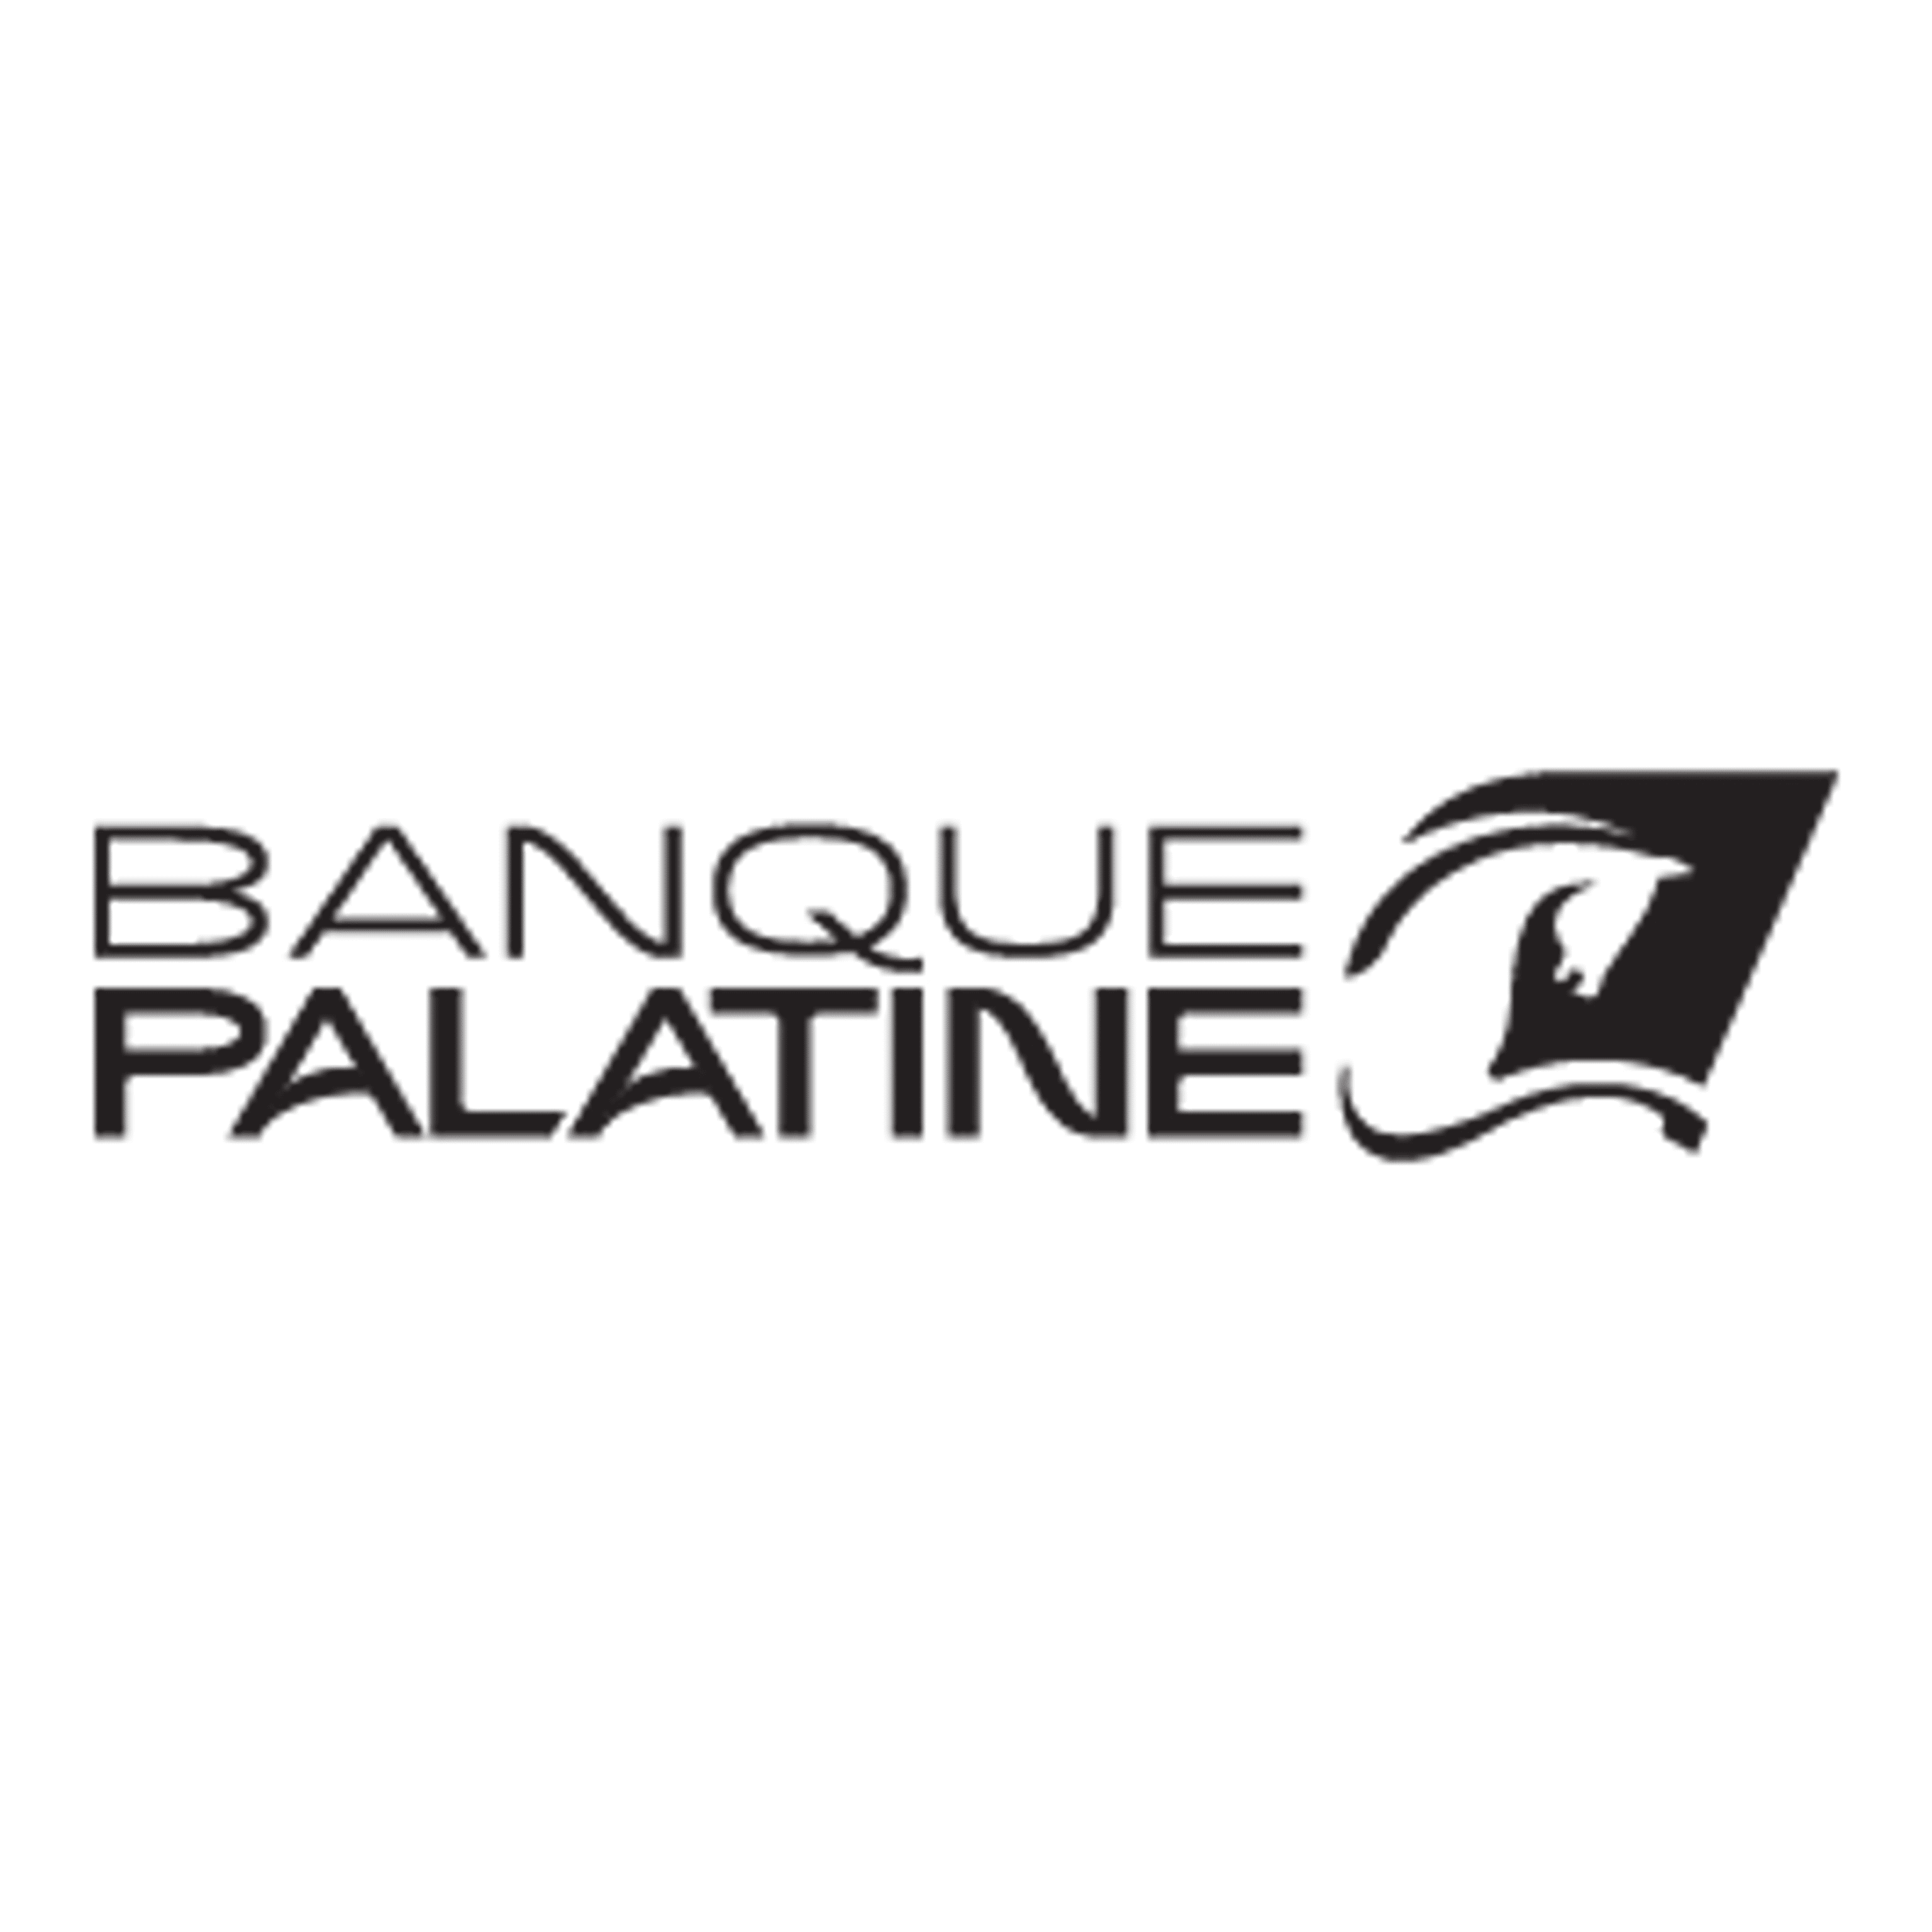 Banque palatine